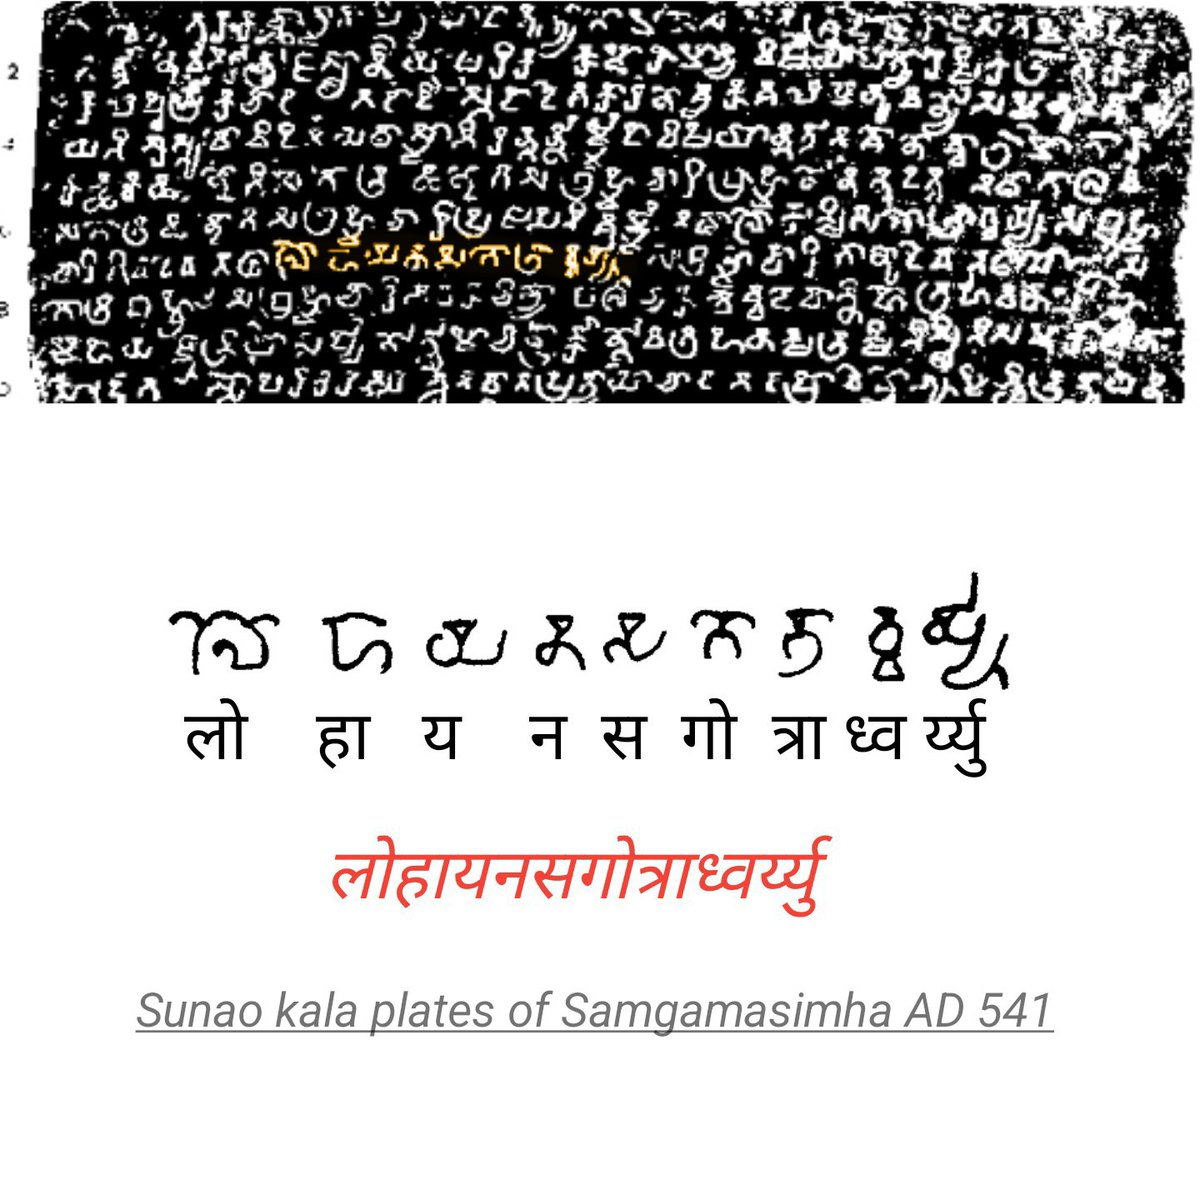 3] Advaryu (अध्वर्यु) - Adhvaryus are the priests (ऋत्विज) of Yajnas centered to the Yajurveda A Brahmin Bhanudeva is called Adhvaryu in the Sunao plates of Sangamasimha of 541 A.D. लोहायनसगोत्राध्वर्यु ~ Bhanudeva of Lohayana gotra and is an Advaryu...